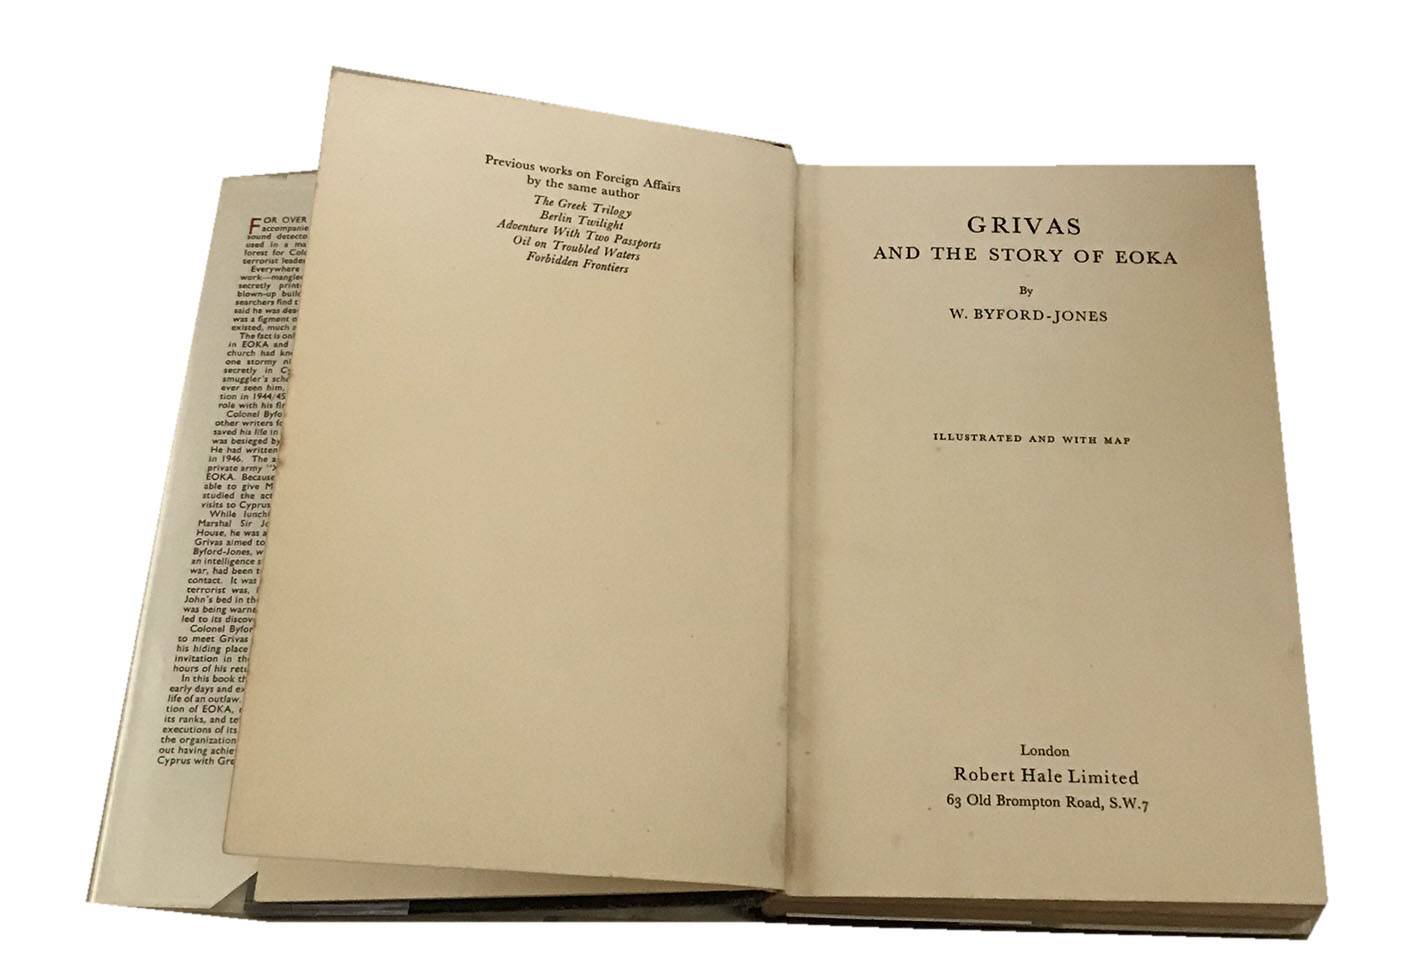 GRIVAS AND THE STORY OF EOKA